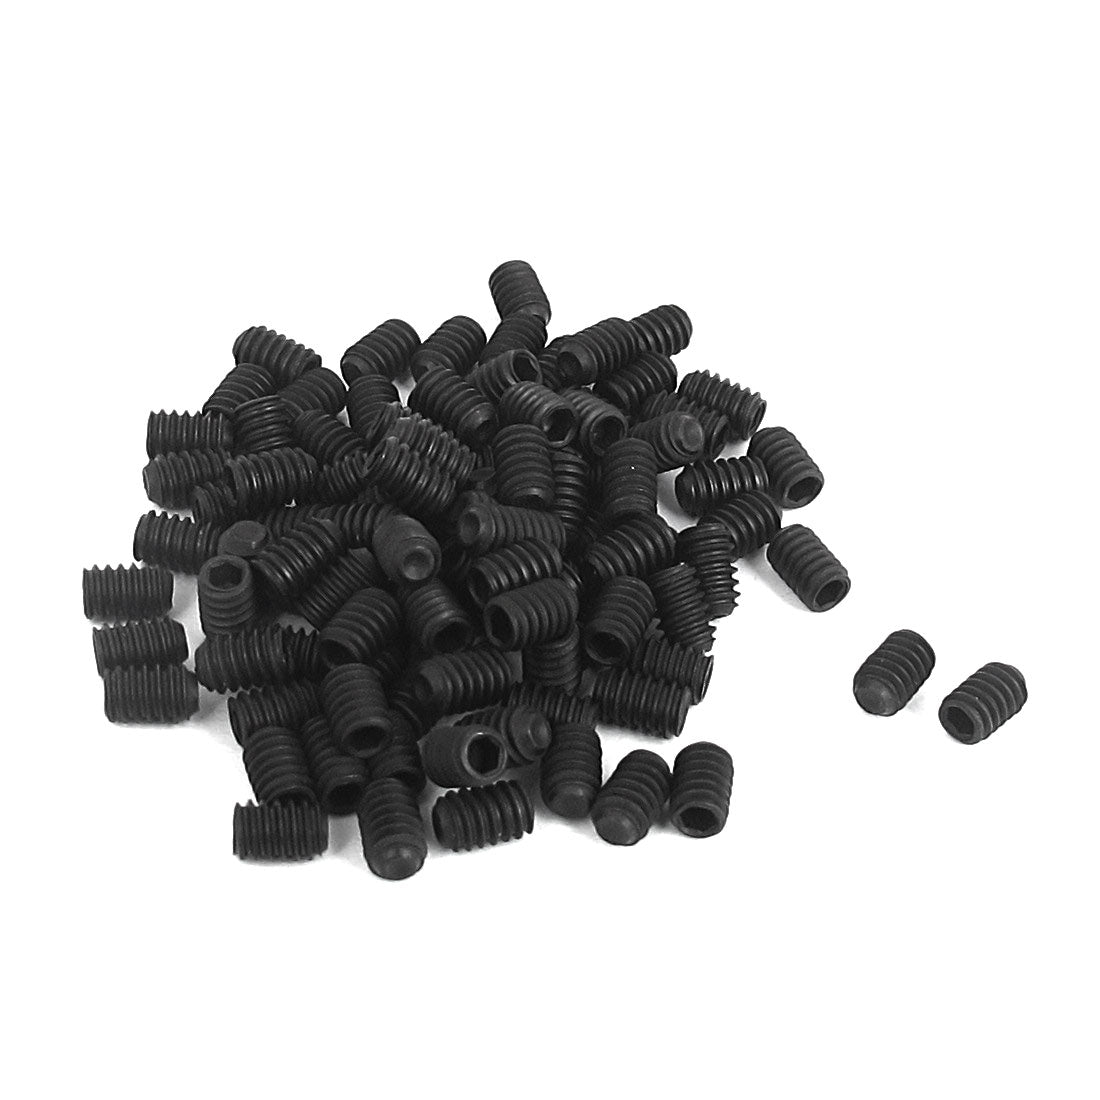 uxcell Uxcell Metric M3x4.75mm 12.9 Alloy Steel Hex Socket Set Cap Point Grub Screws Black 100pcs